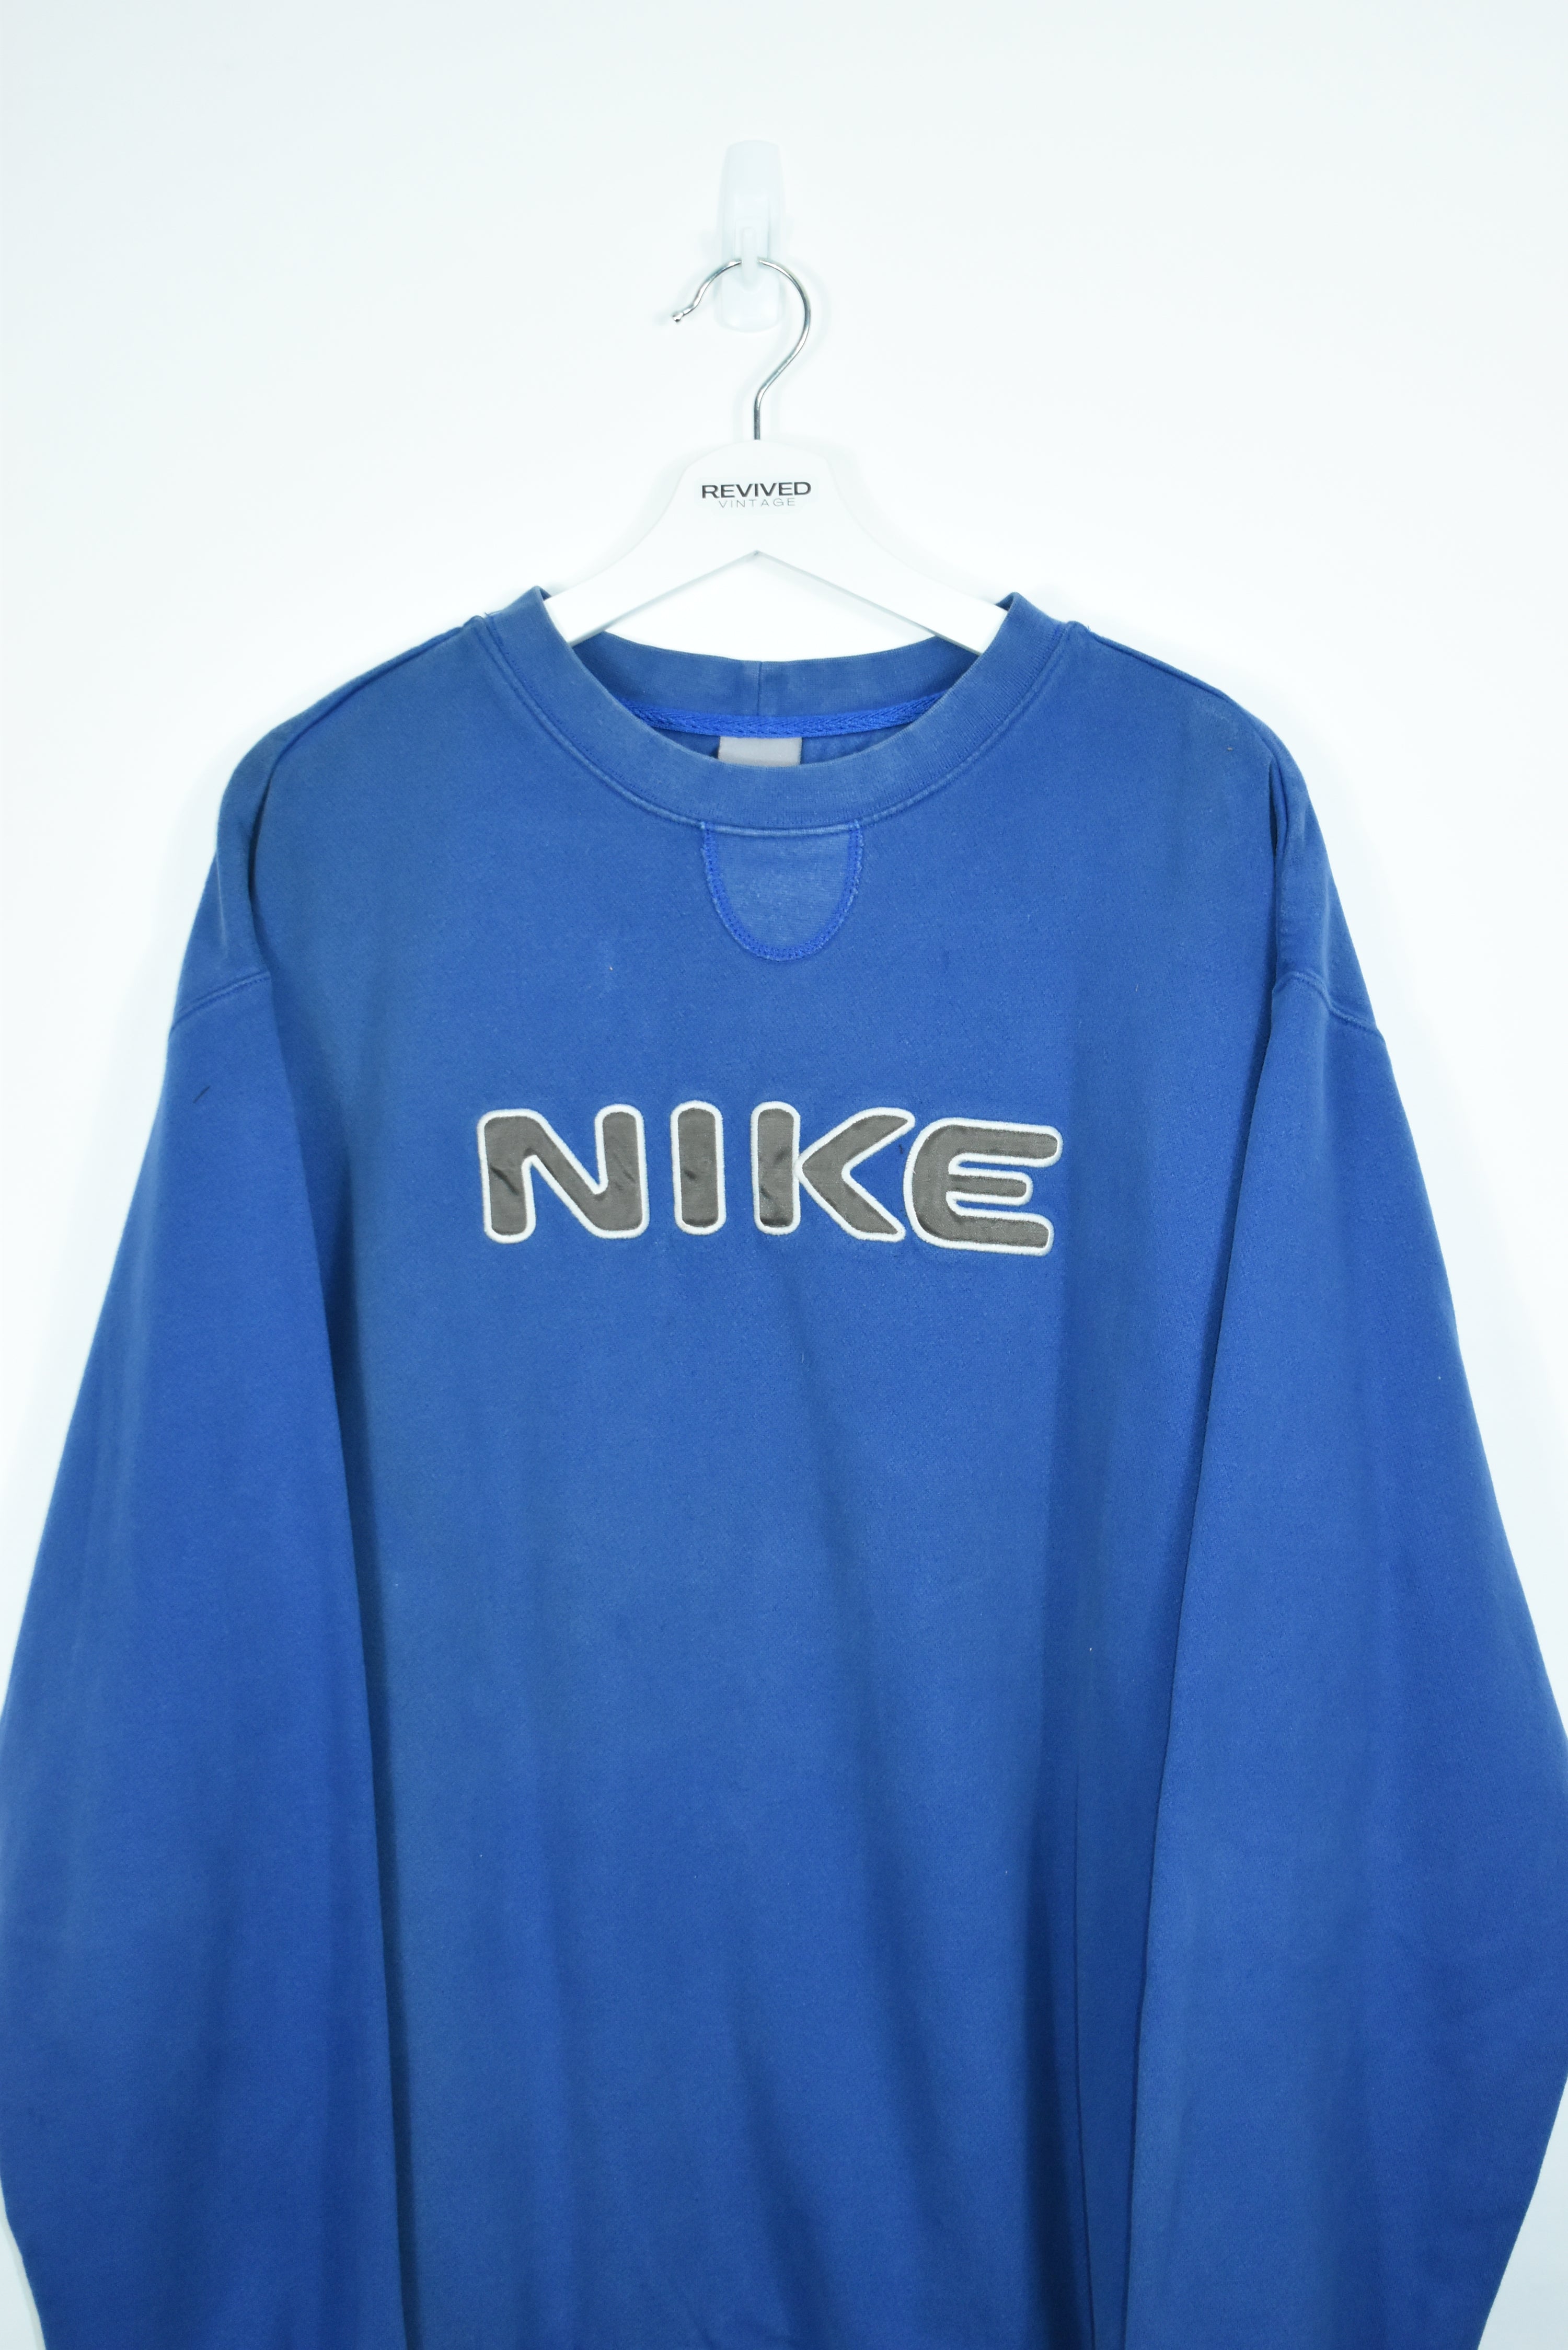 Vintage Nike Puff Print Embroidery Sweatshirt XLARGE